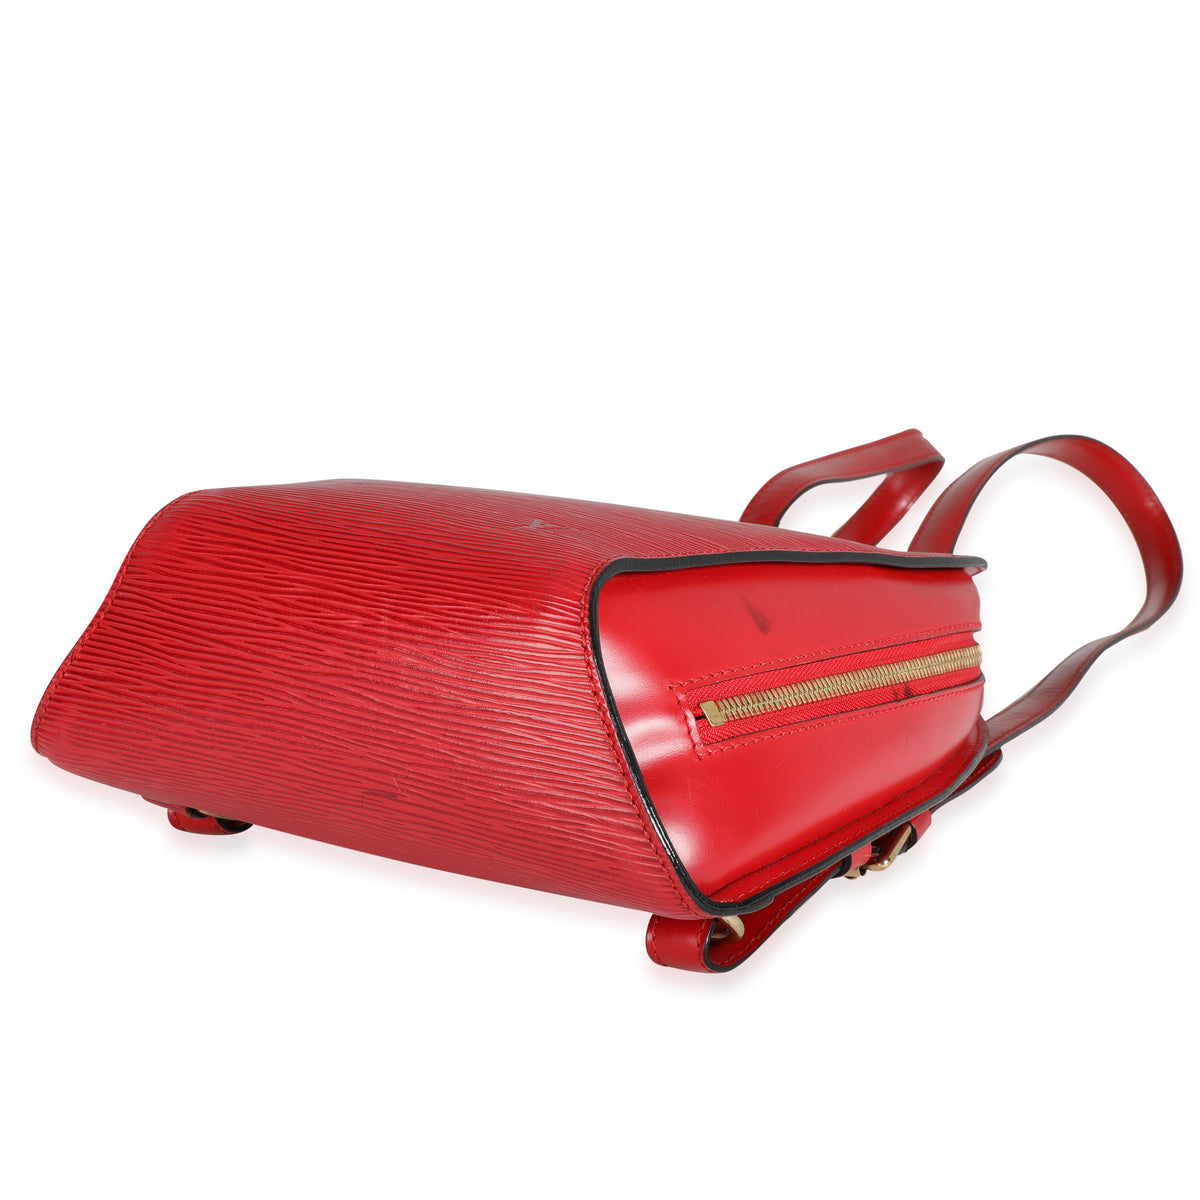 Louis Vuitton Red Epi Leather Mabillon Backpack Bag Louis Vuitton